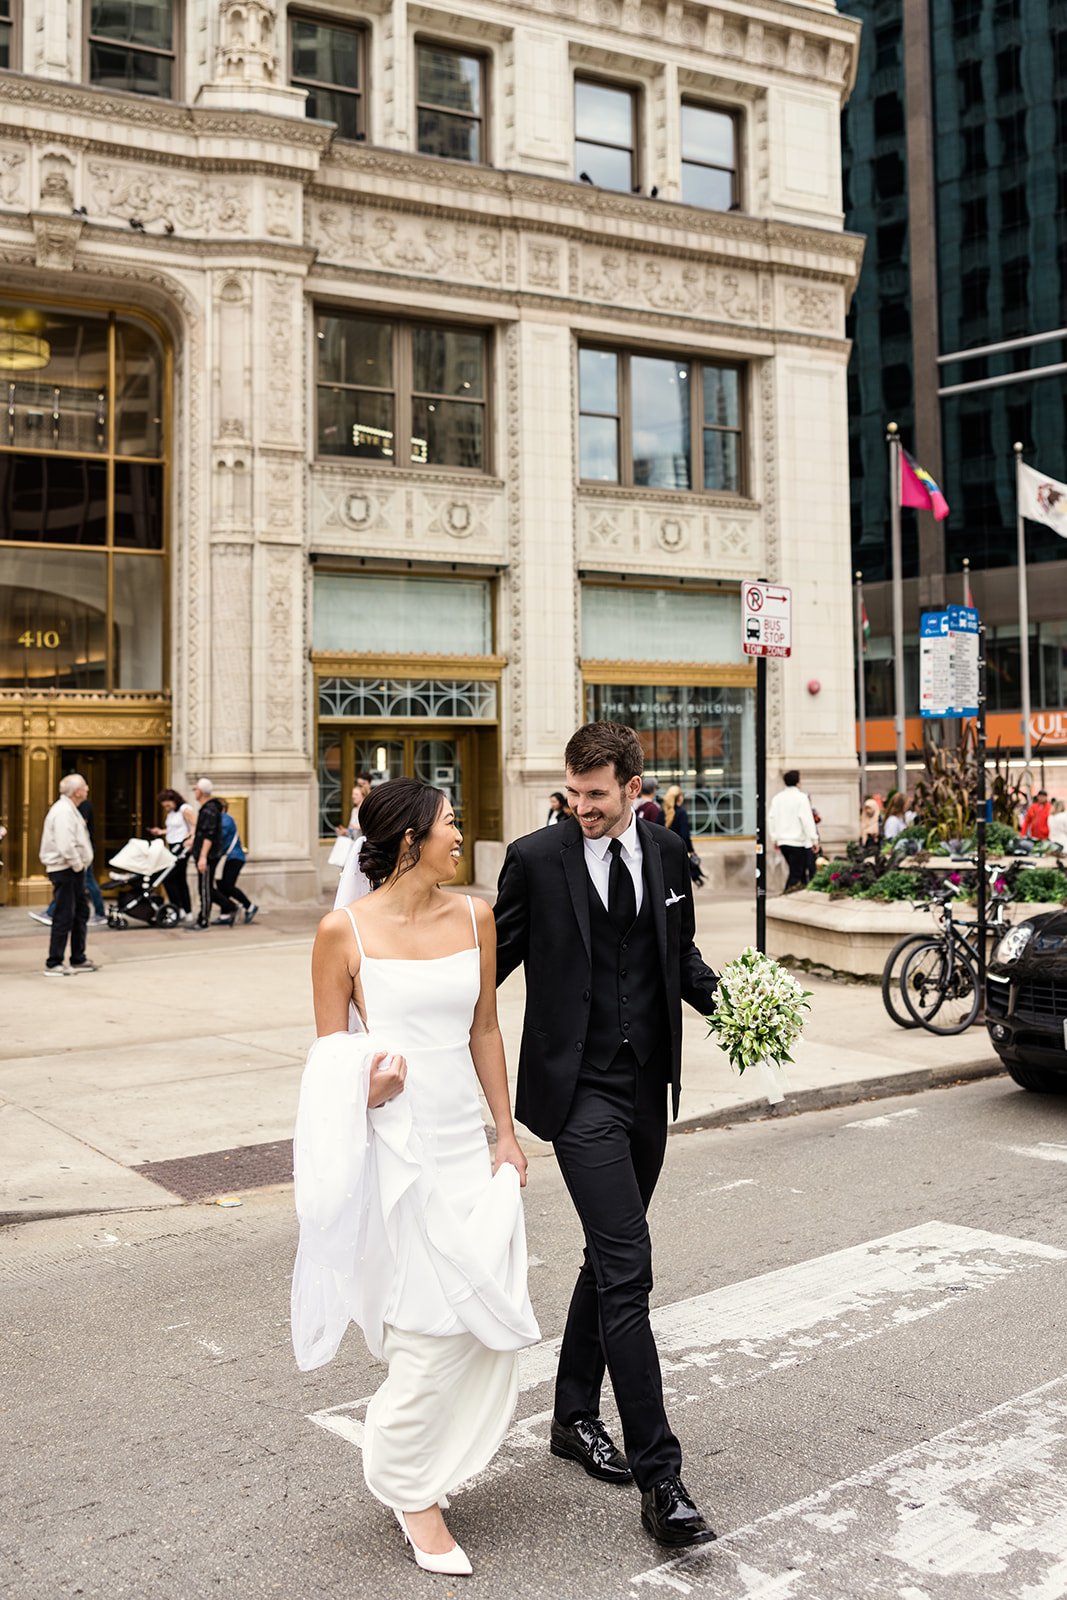 Royal-Sonesta-Chicago-Downtown-wedding-by-Emma-Mullins-Photography-79.jpg